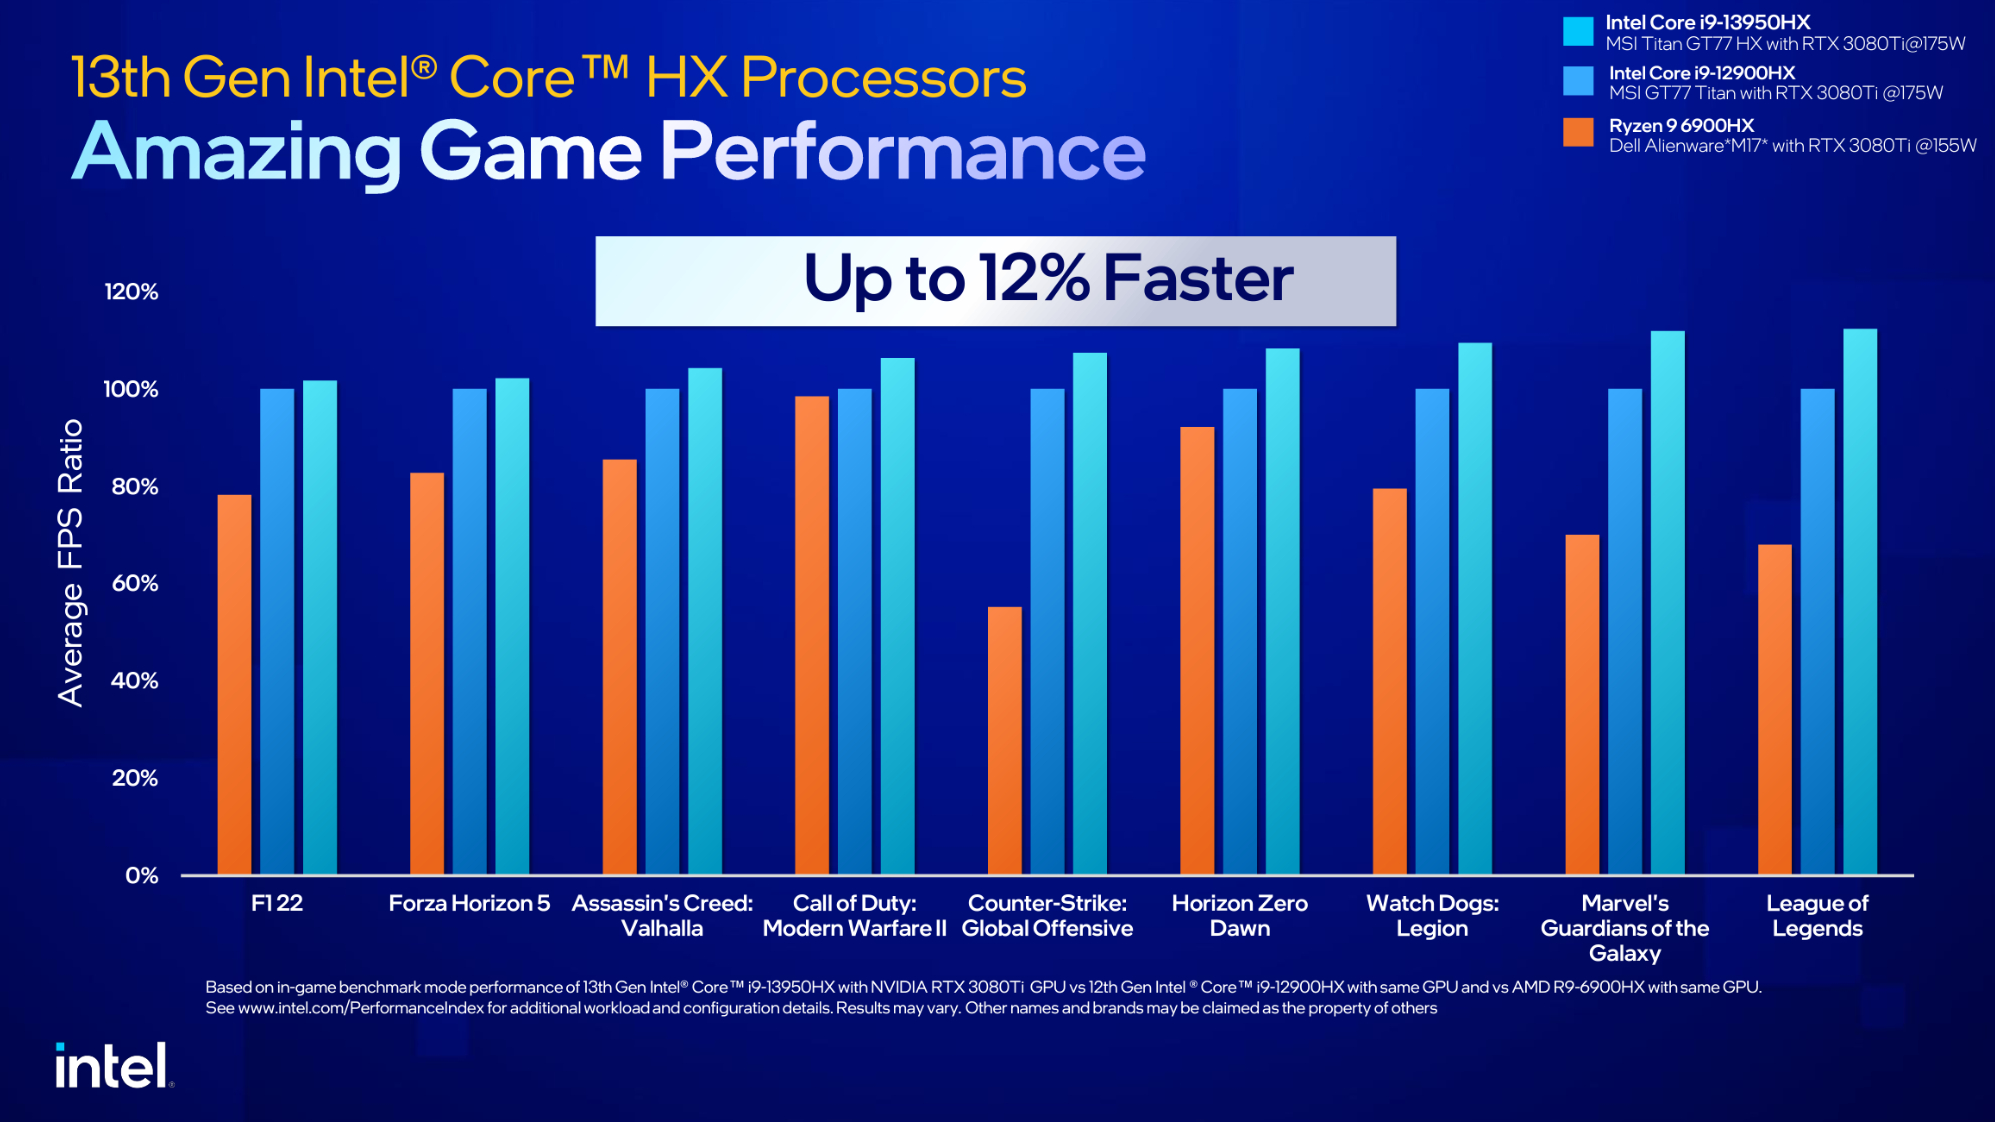 Intel 13th Generation Core HX Series Processor Performance Slide.